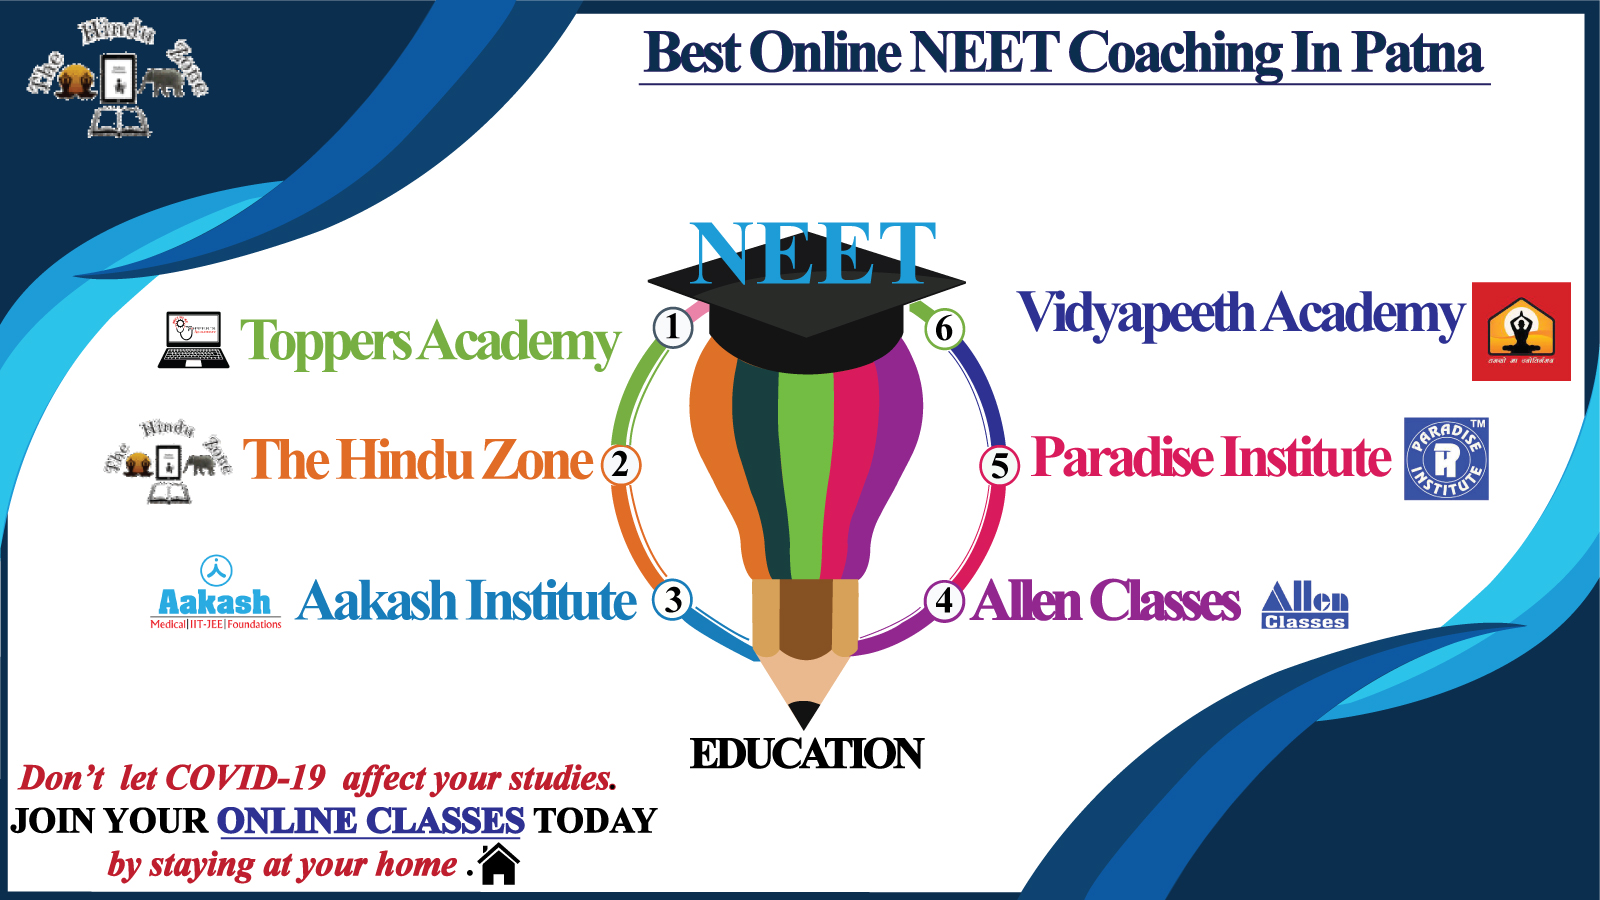 Best Online NEET Coaching In Patna